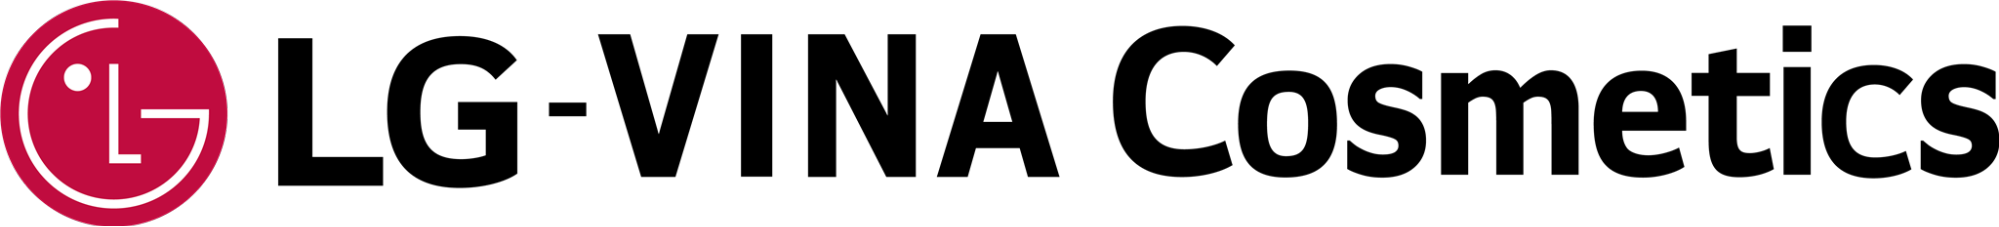 Lgvina logo